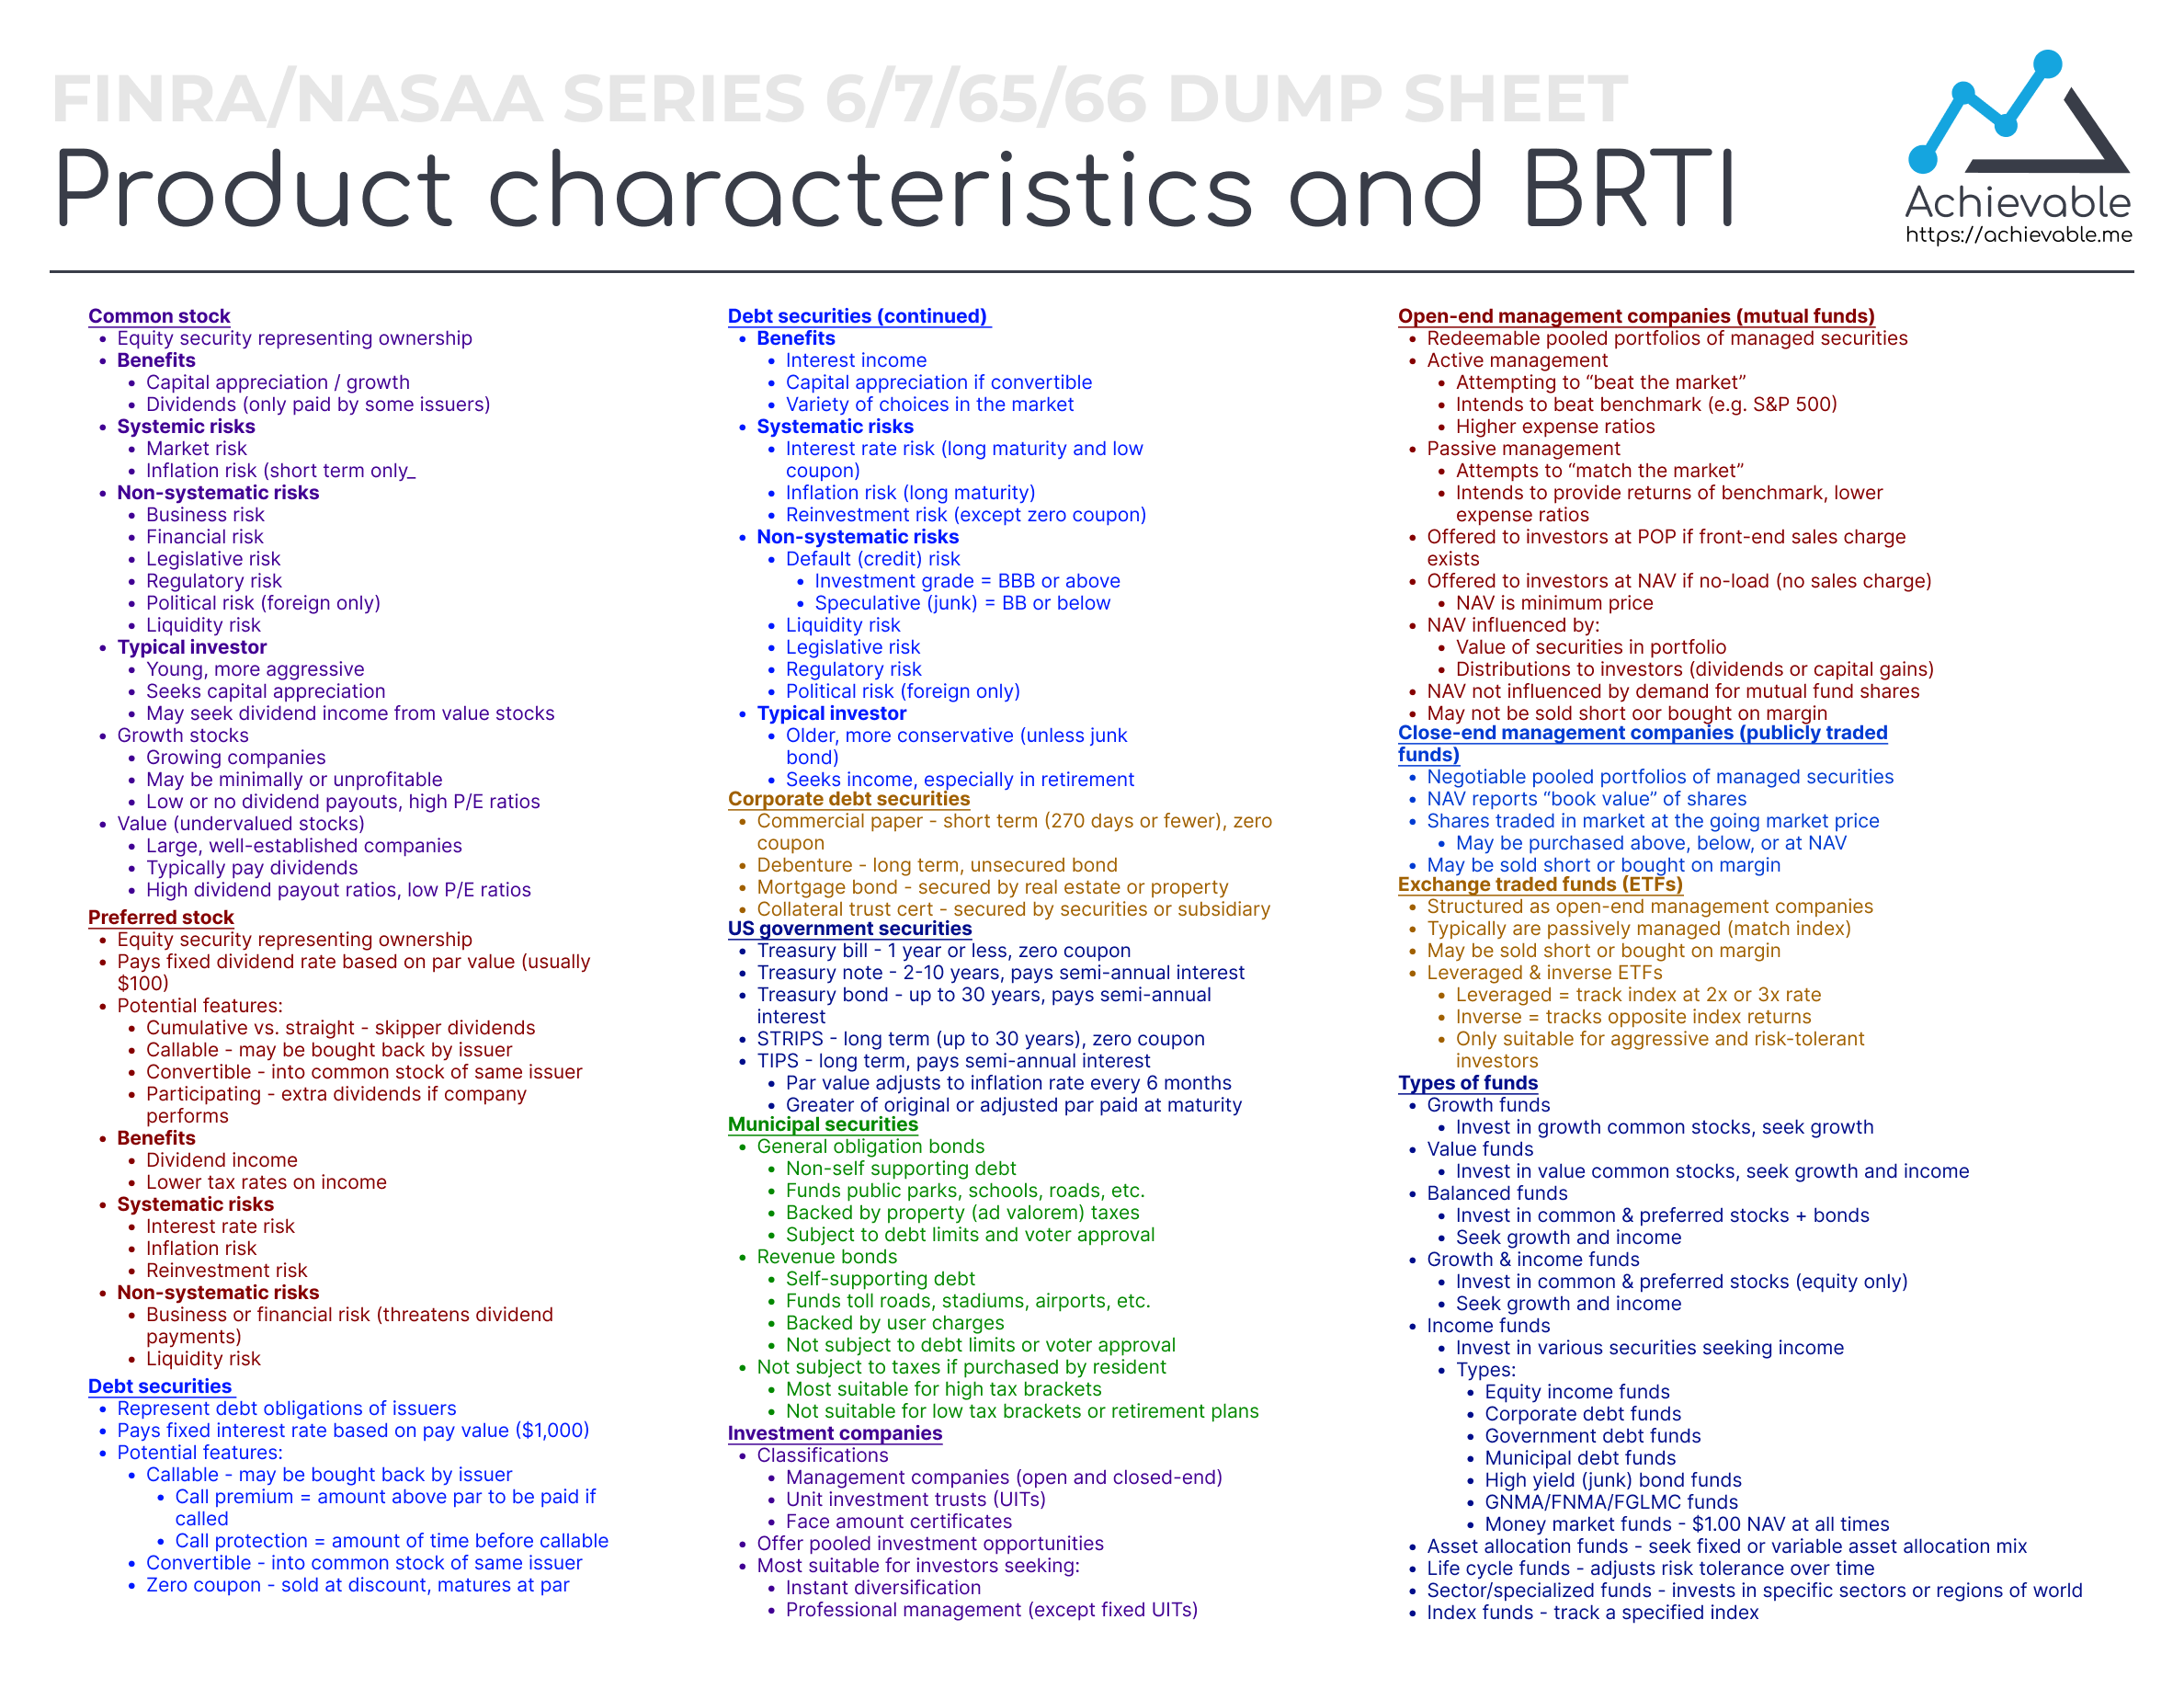 Series 63 Dump Sheet - Product Characteristics and BRTI